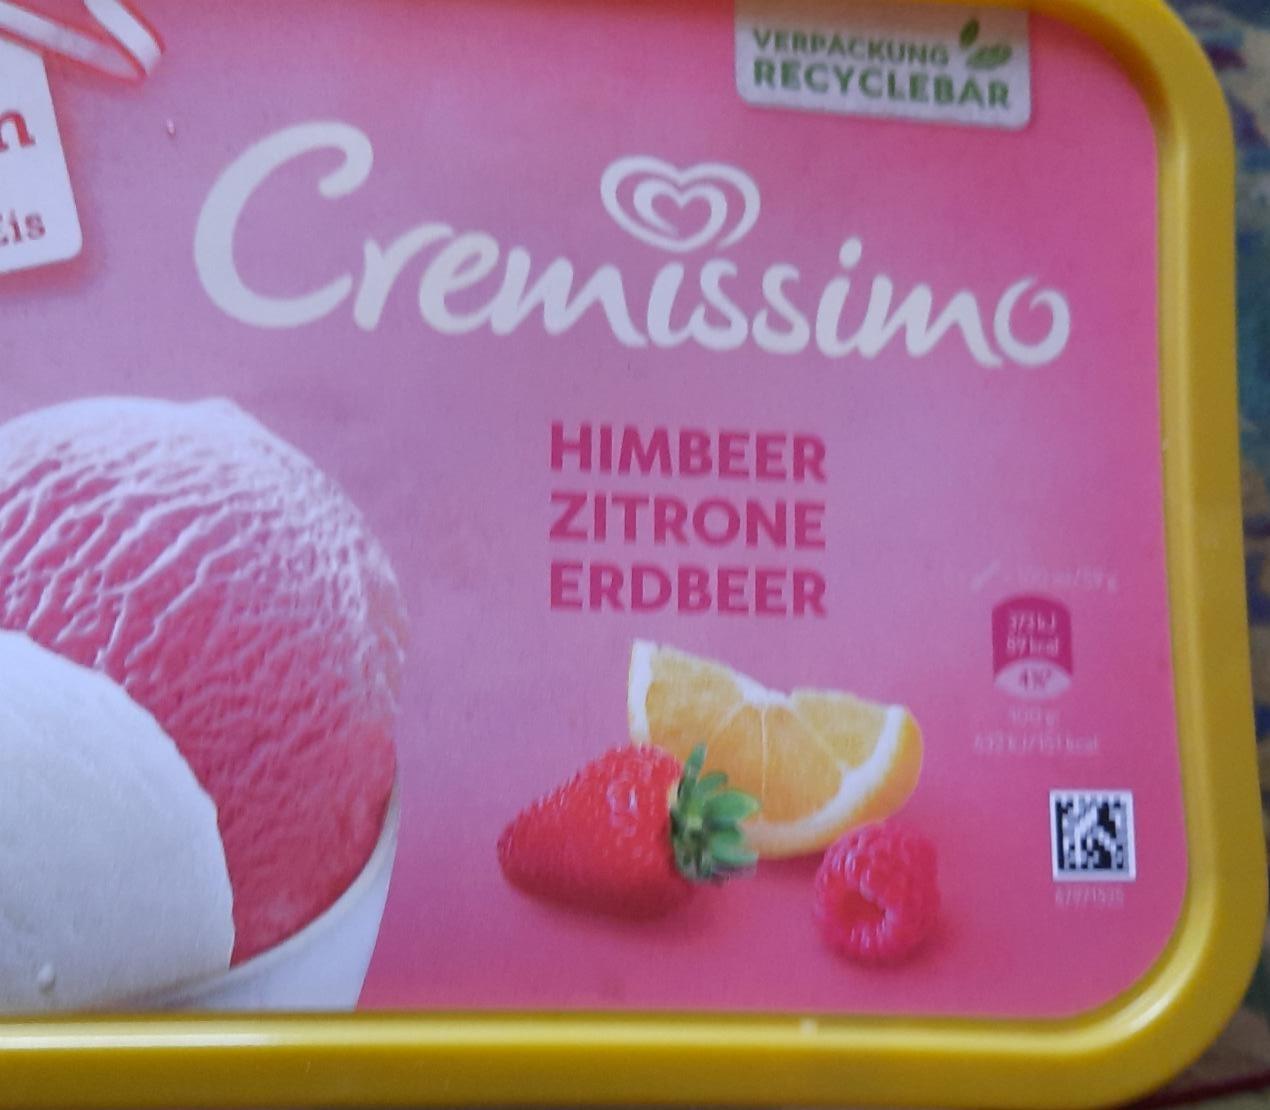 Fotografie - Cremissimo Himber Zitrone Erdbeer